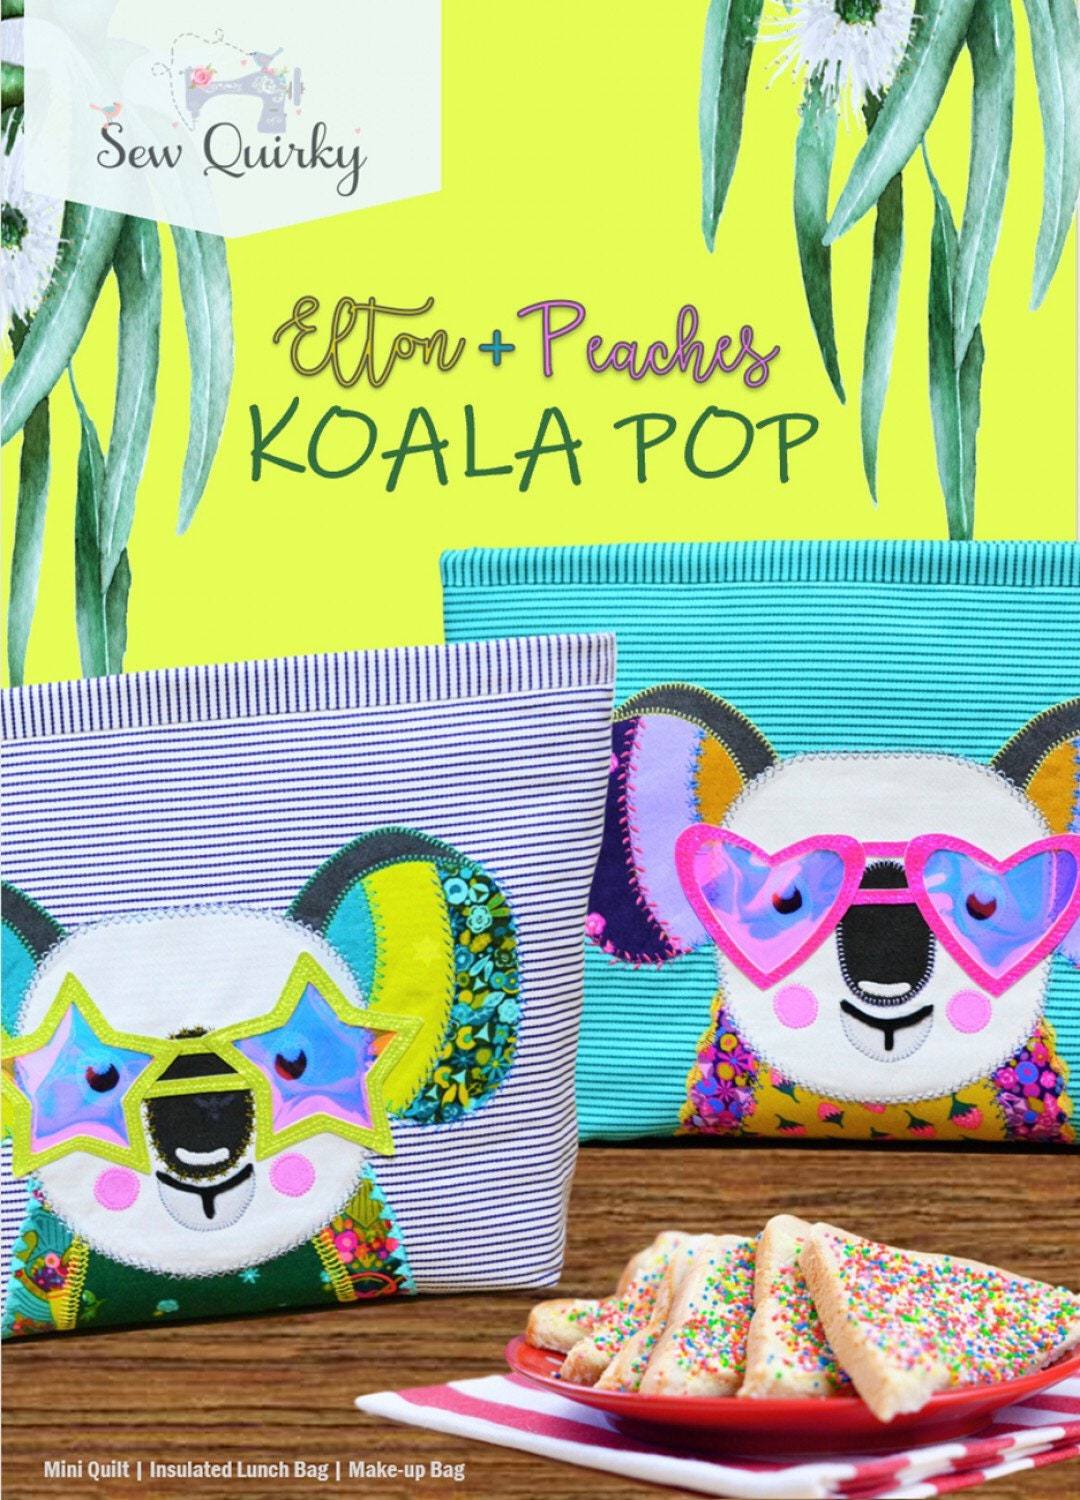 Koala Pop - Sew Quirky - Mandy Murray - Appliqué Pattern - Mini Quilt Pattern - Lunch Bag Pattern